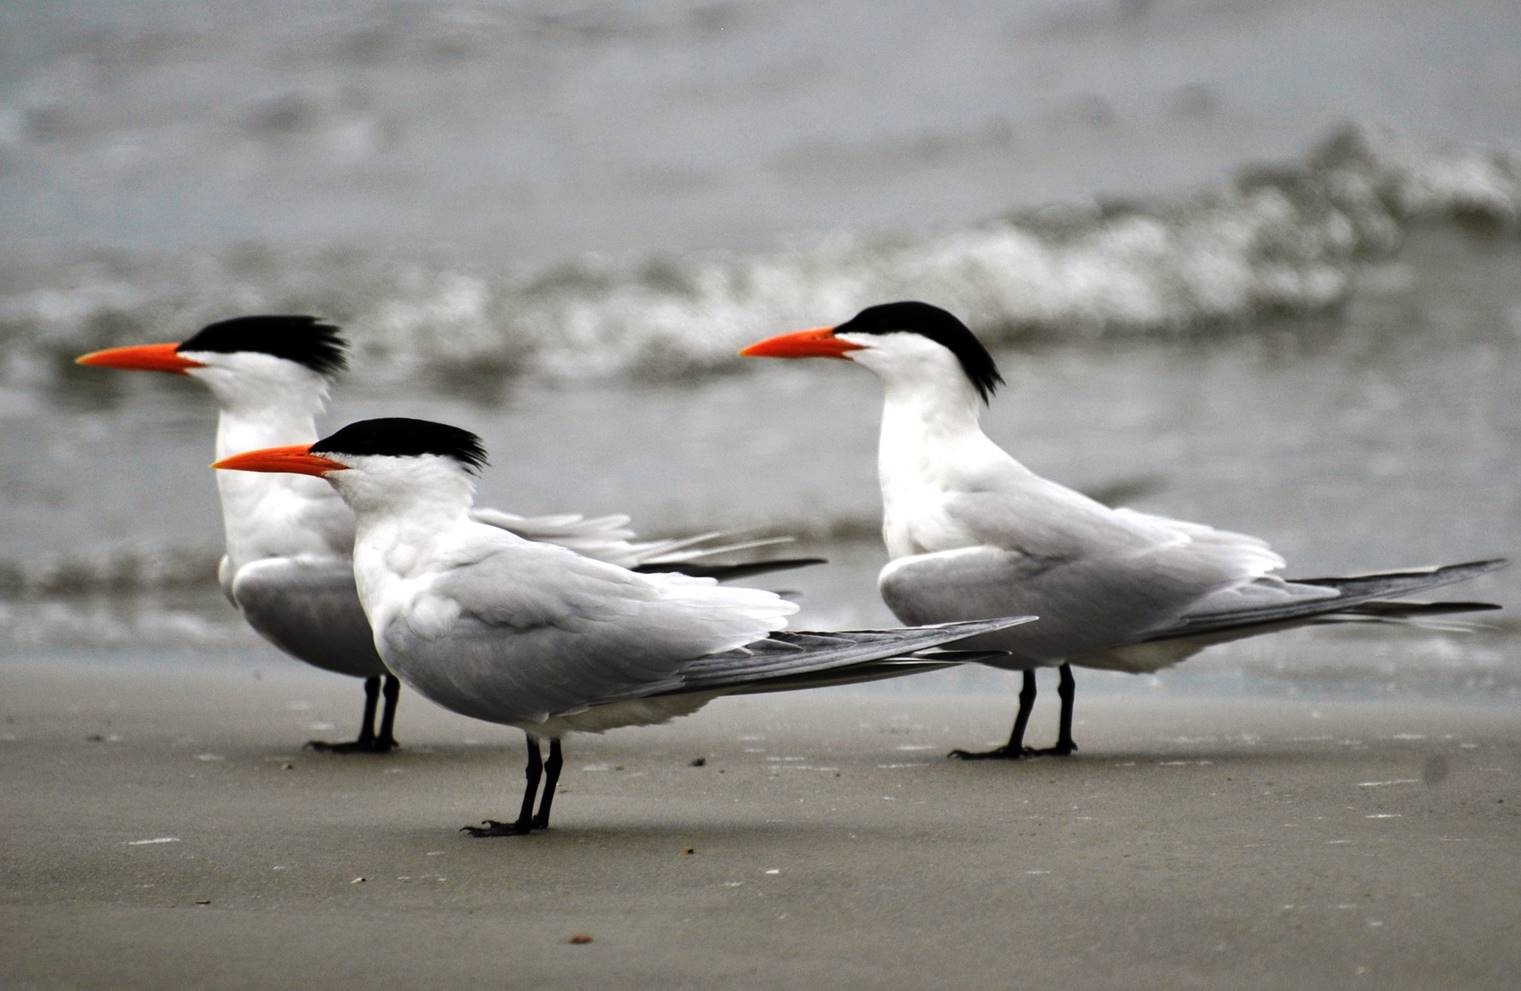 sea gulls with hats.jpg